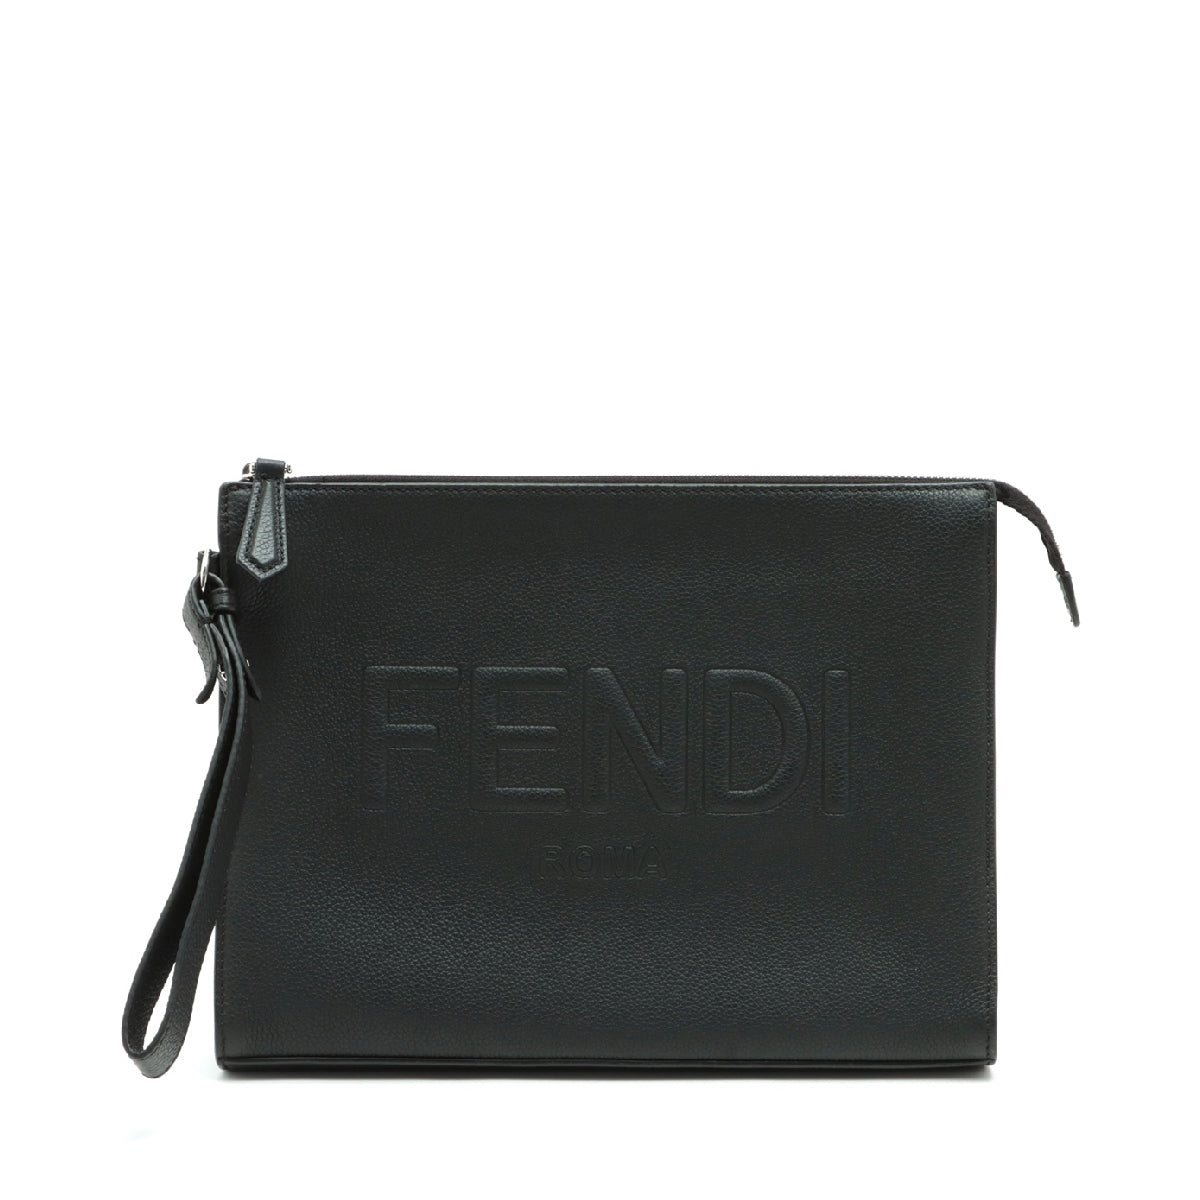 Fendi Logo Leather Clutch Black 7VA491